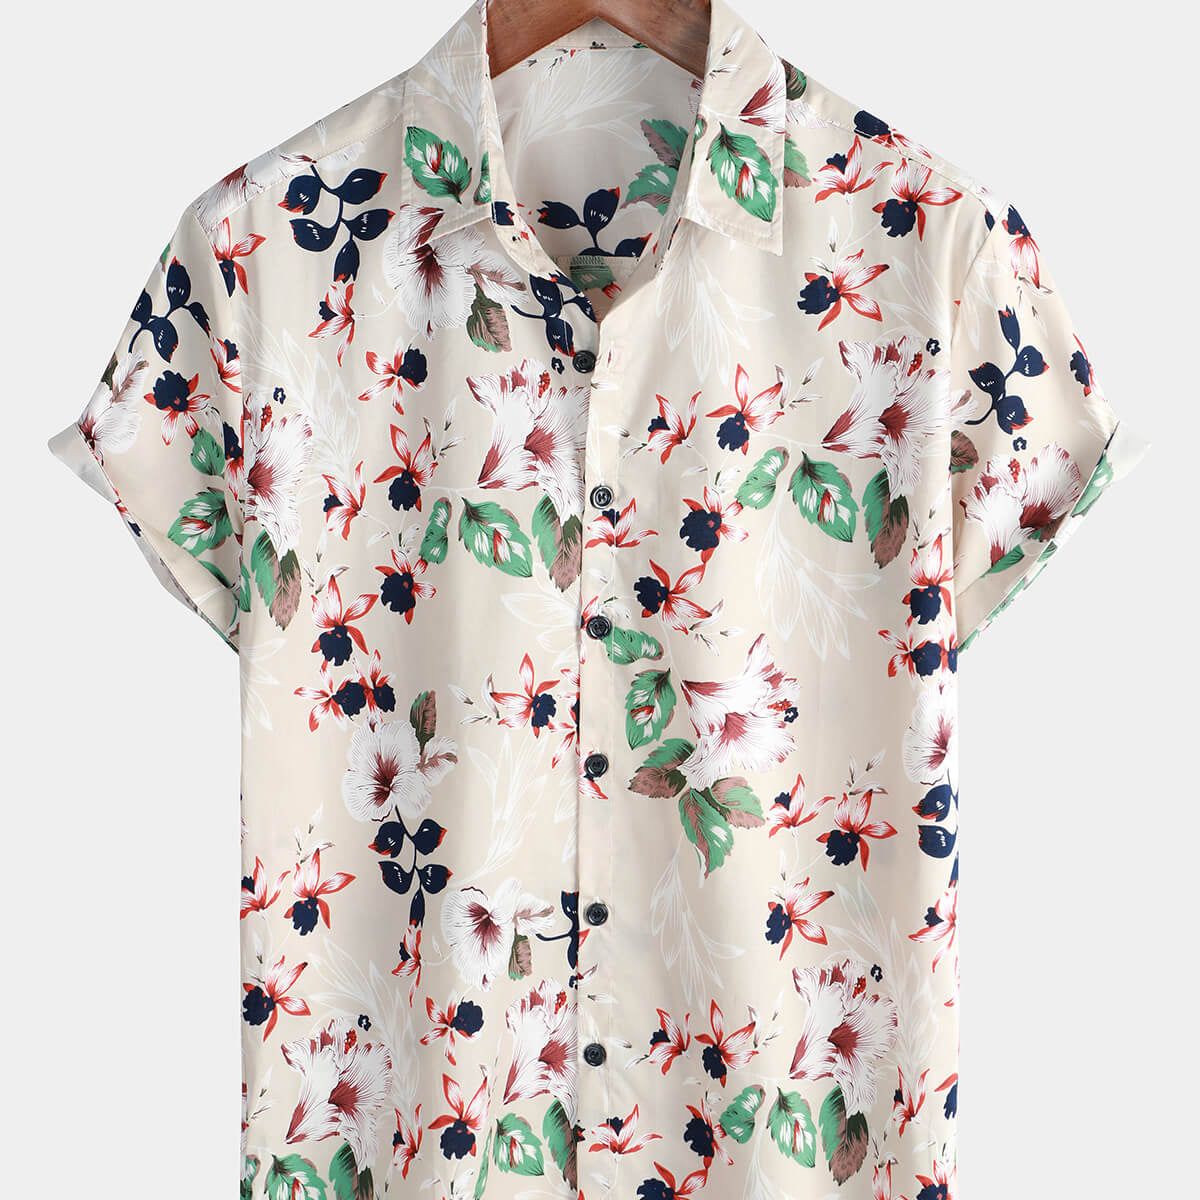 Men's Summer Breathable Cotton Floral Button Up Short Sleeve Shirt